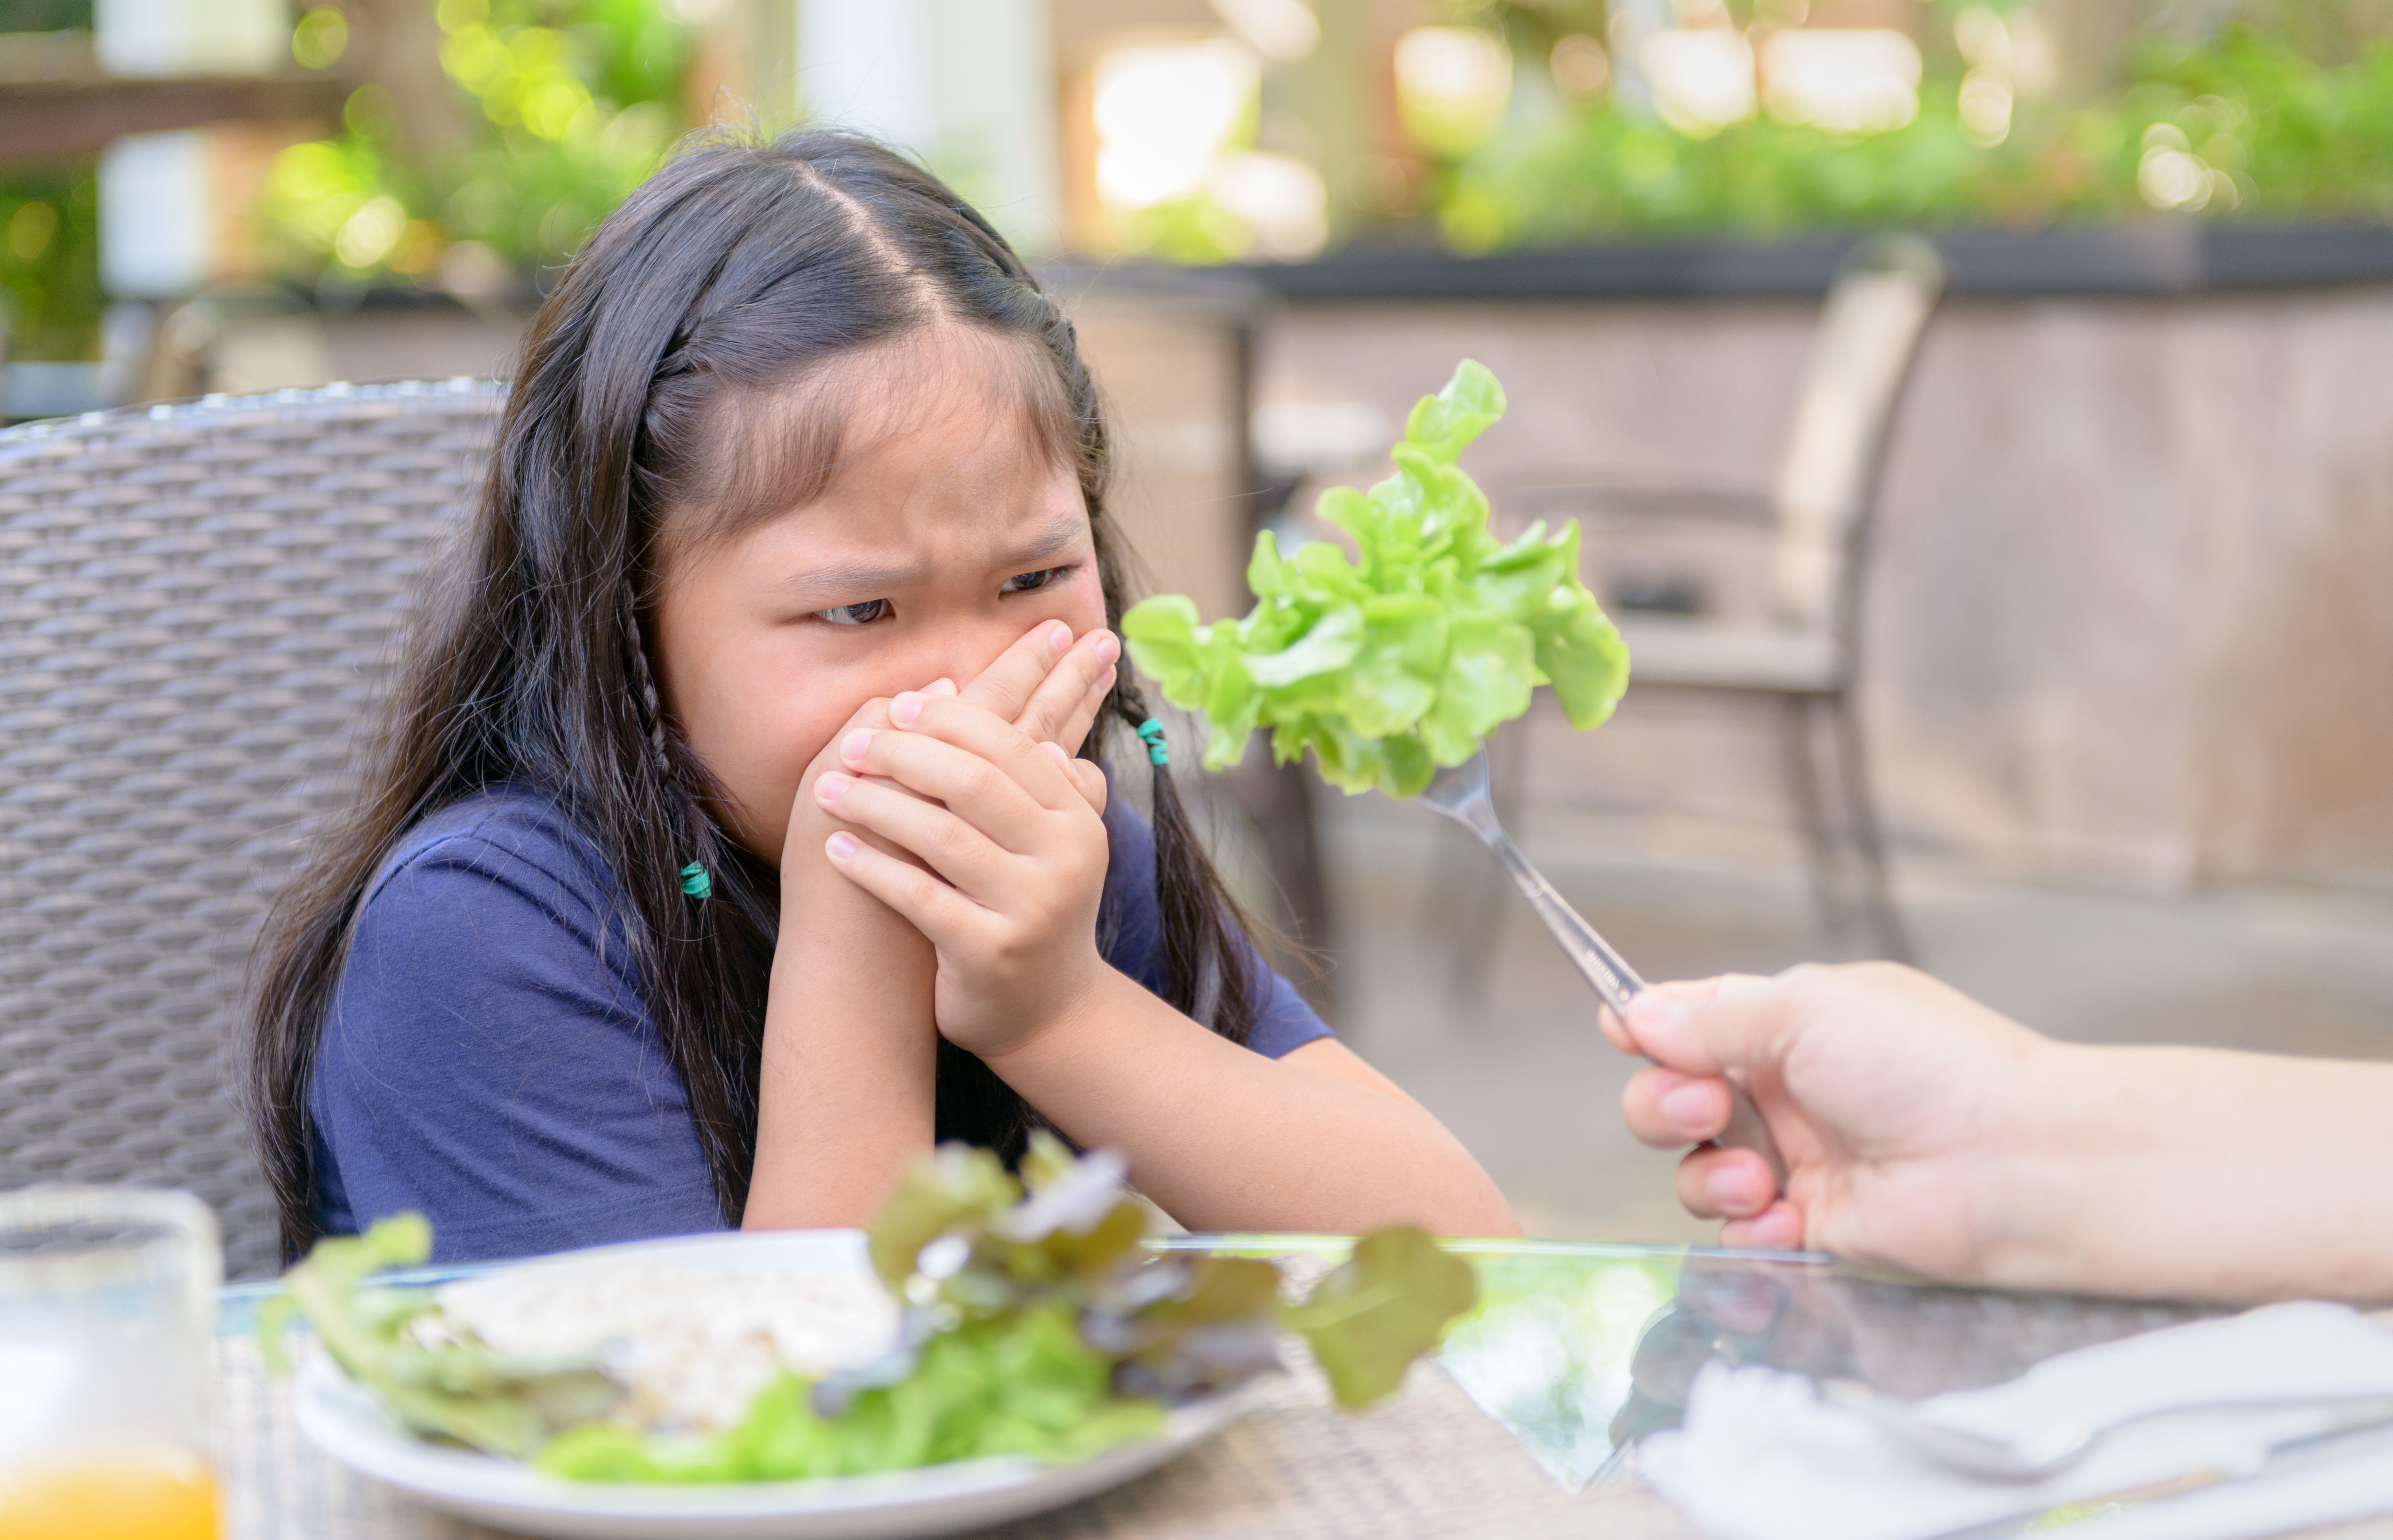 Autistic child refusing to eat food